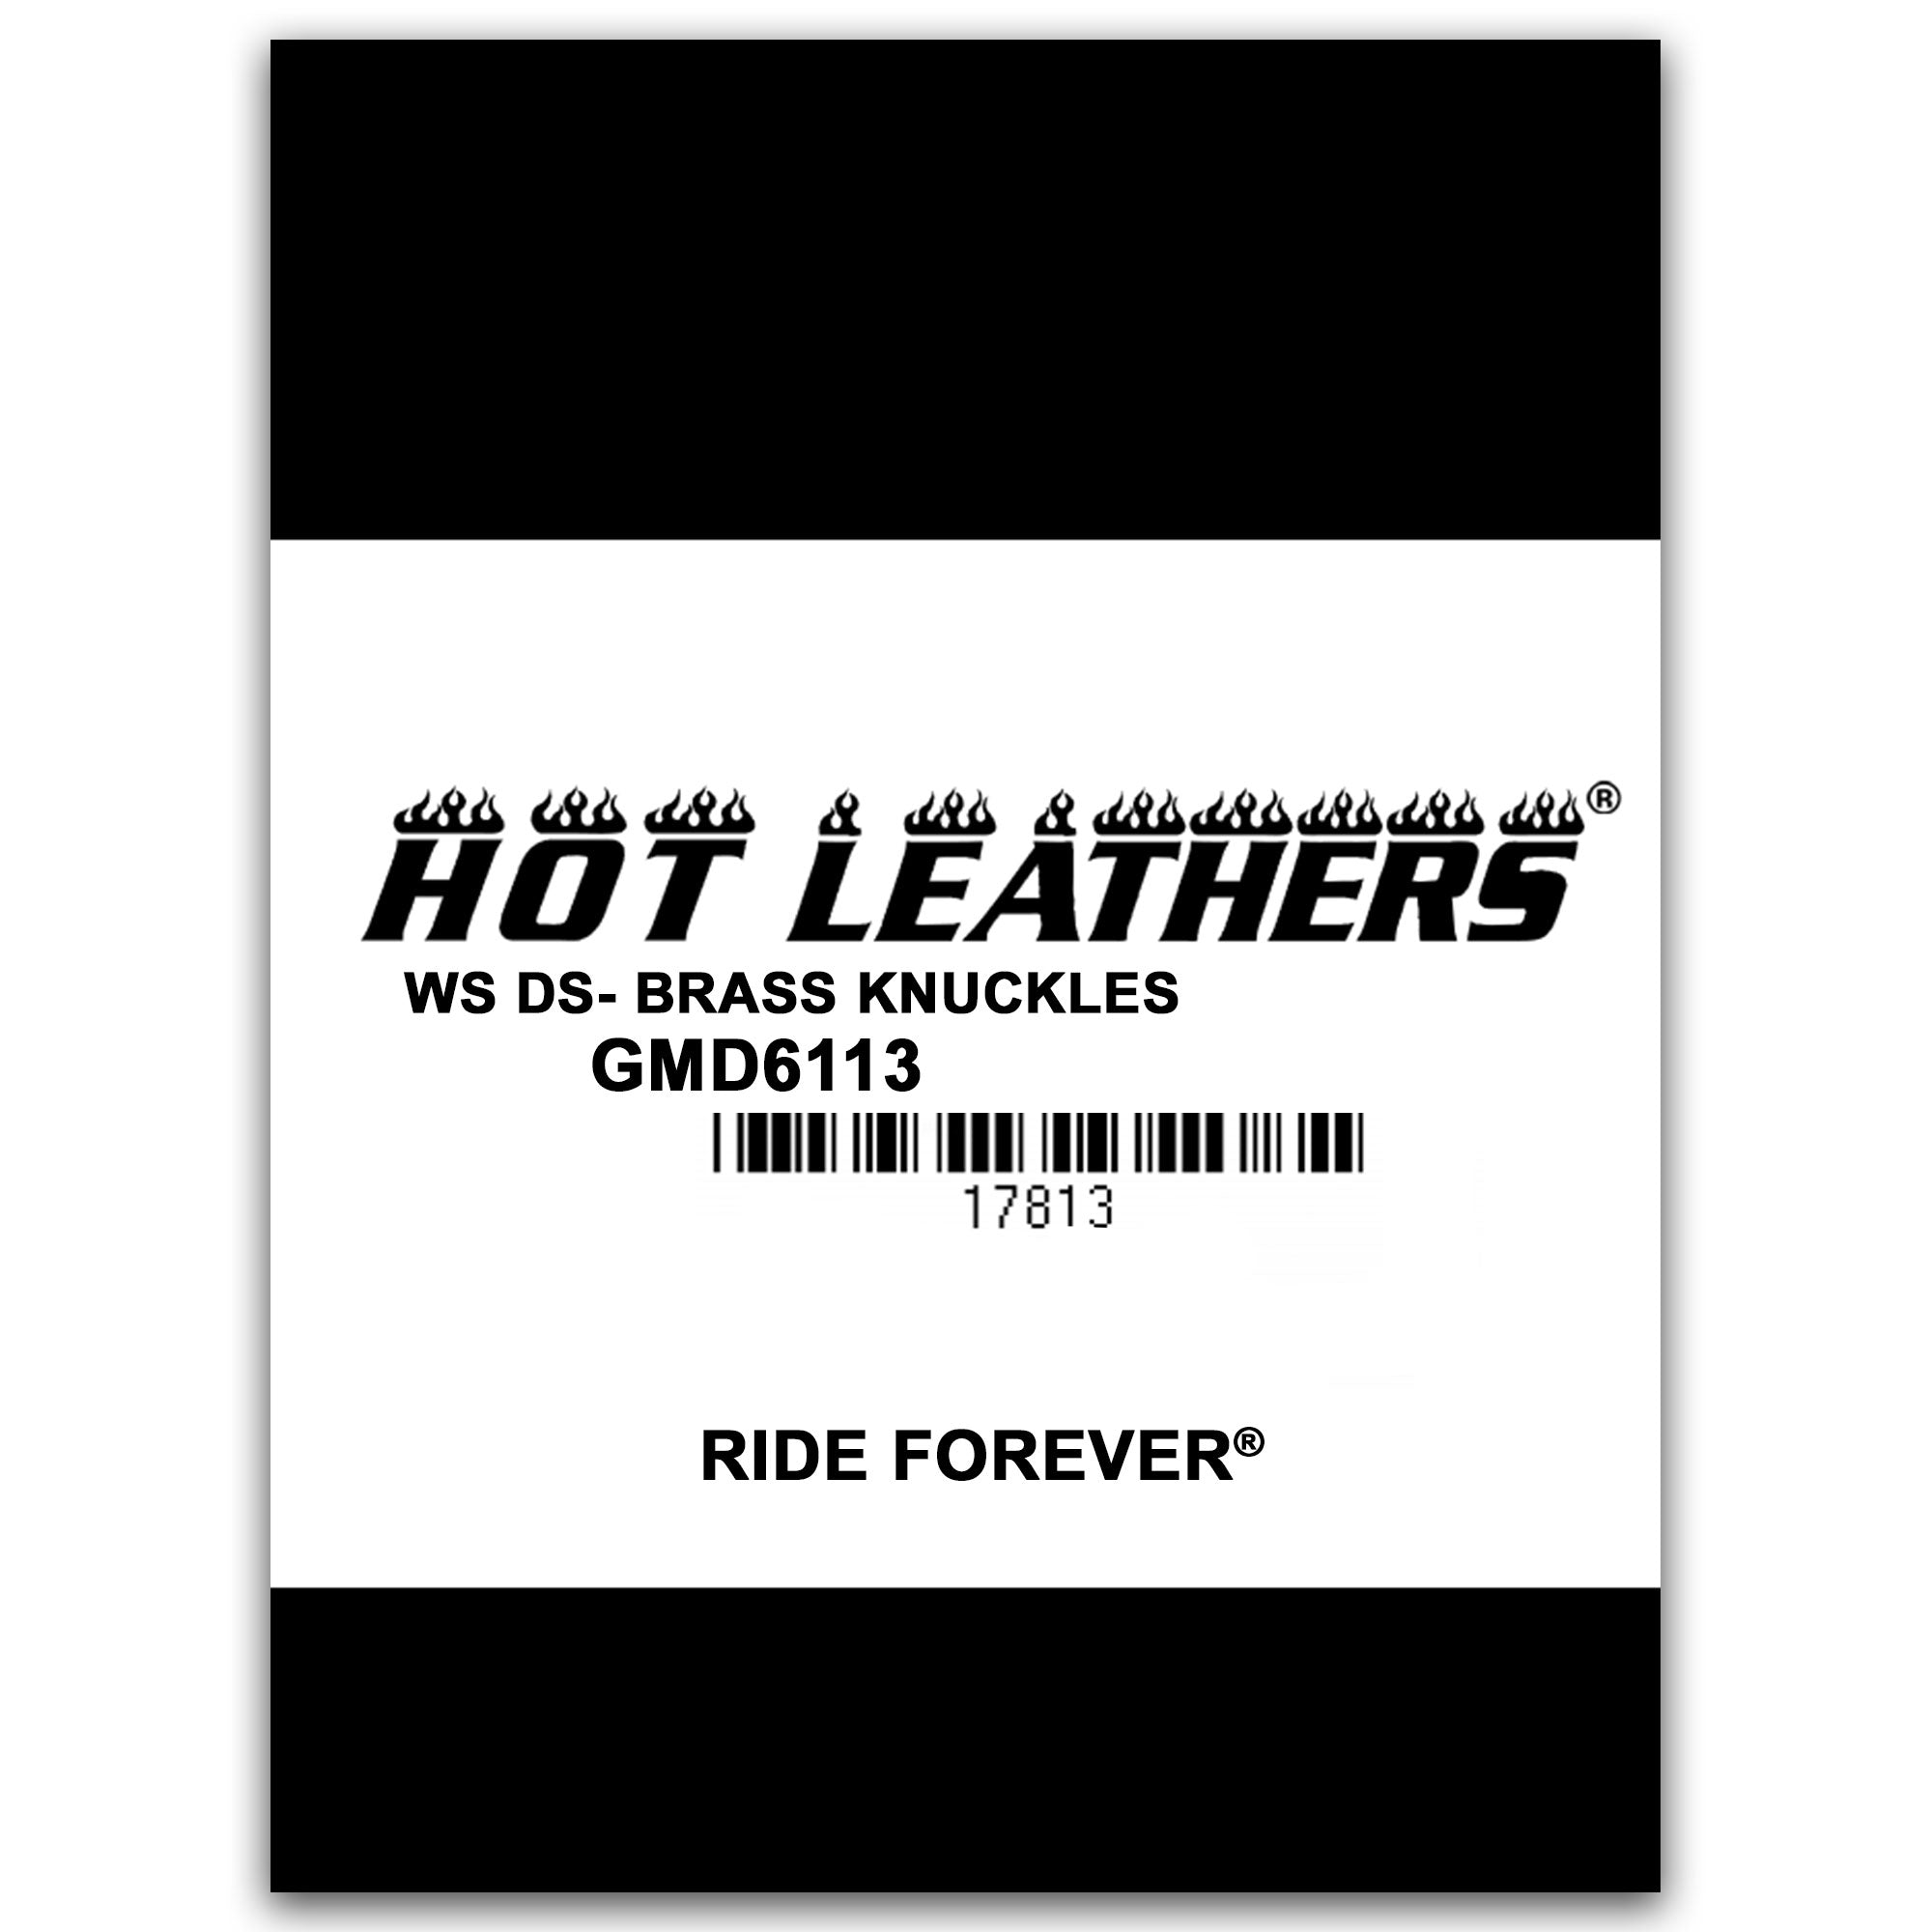  Hot Leathers - PPA3122 Brass Knuckles (4 Width x 2 Height),  Black : Automotive